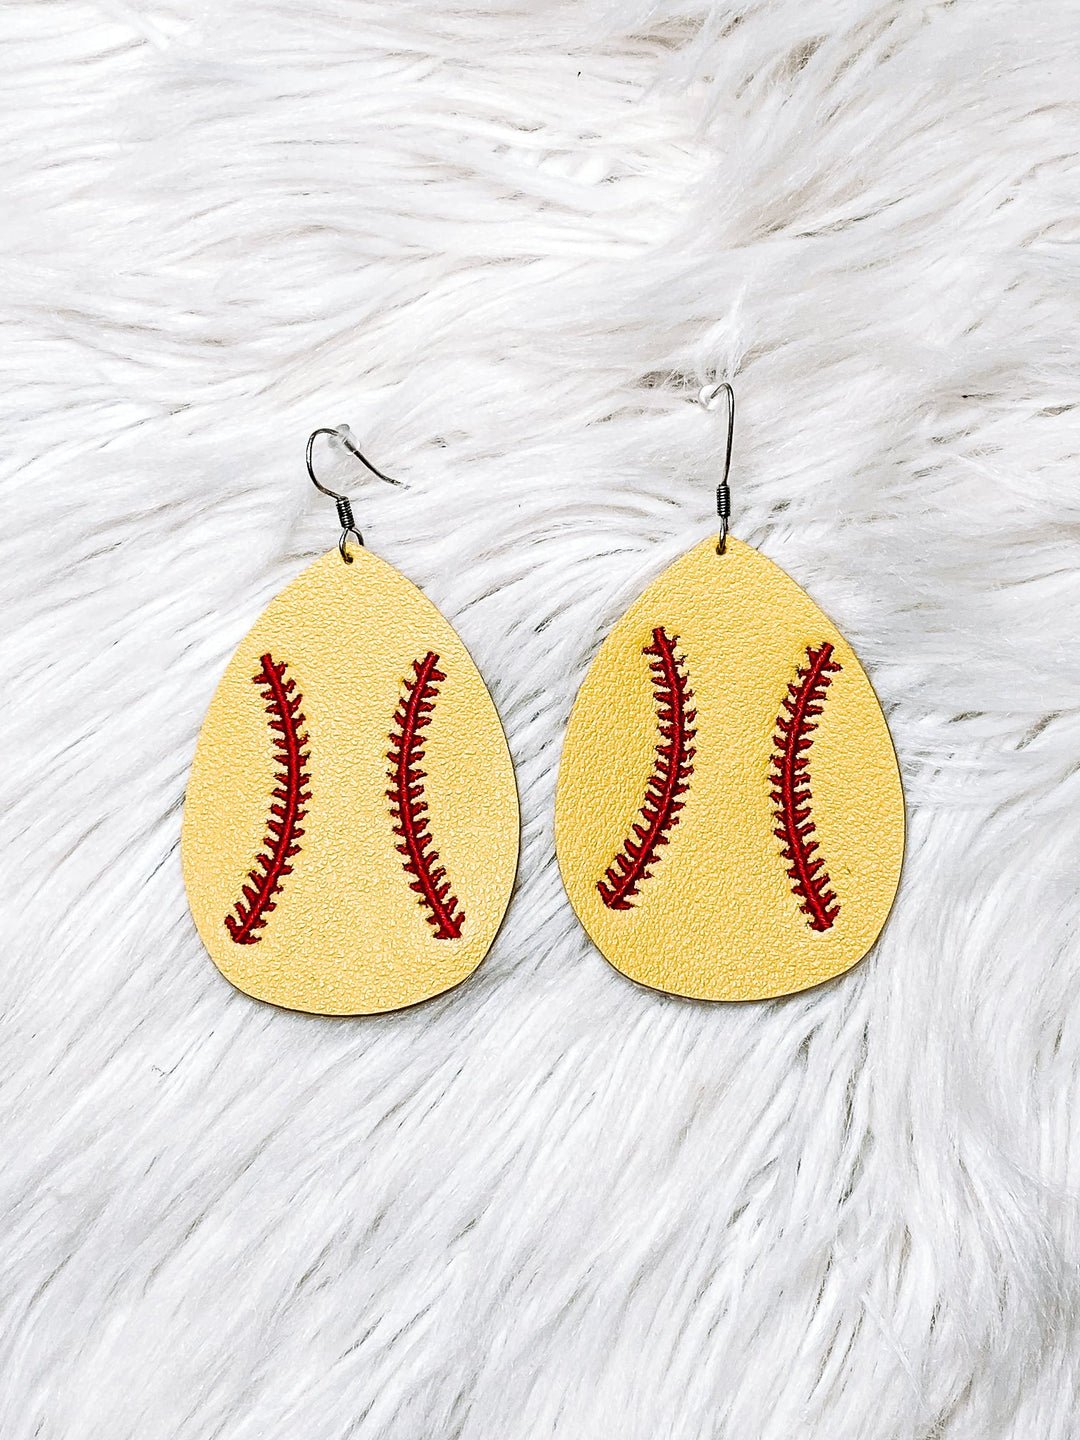 Softball leather earrings - Jayden Layne